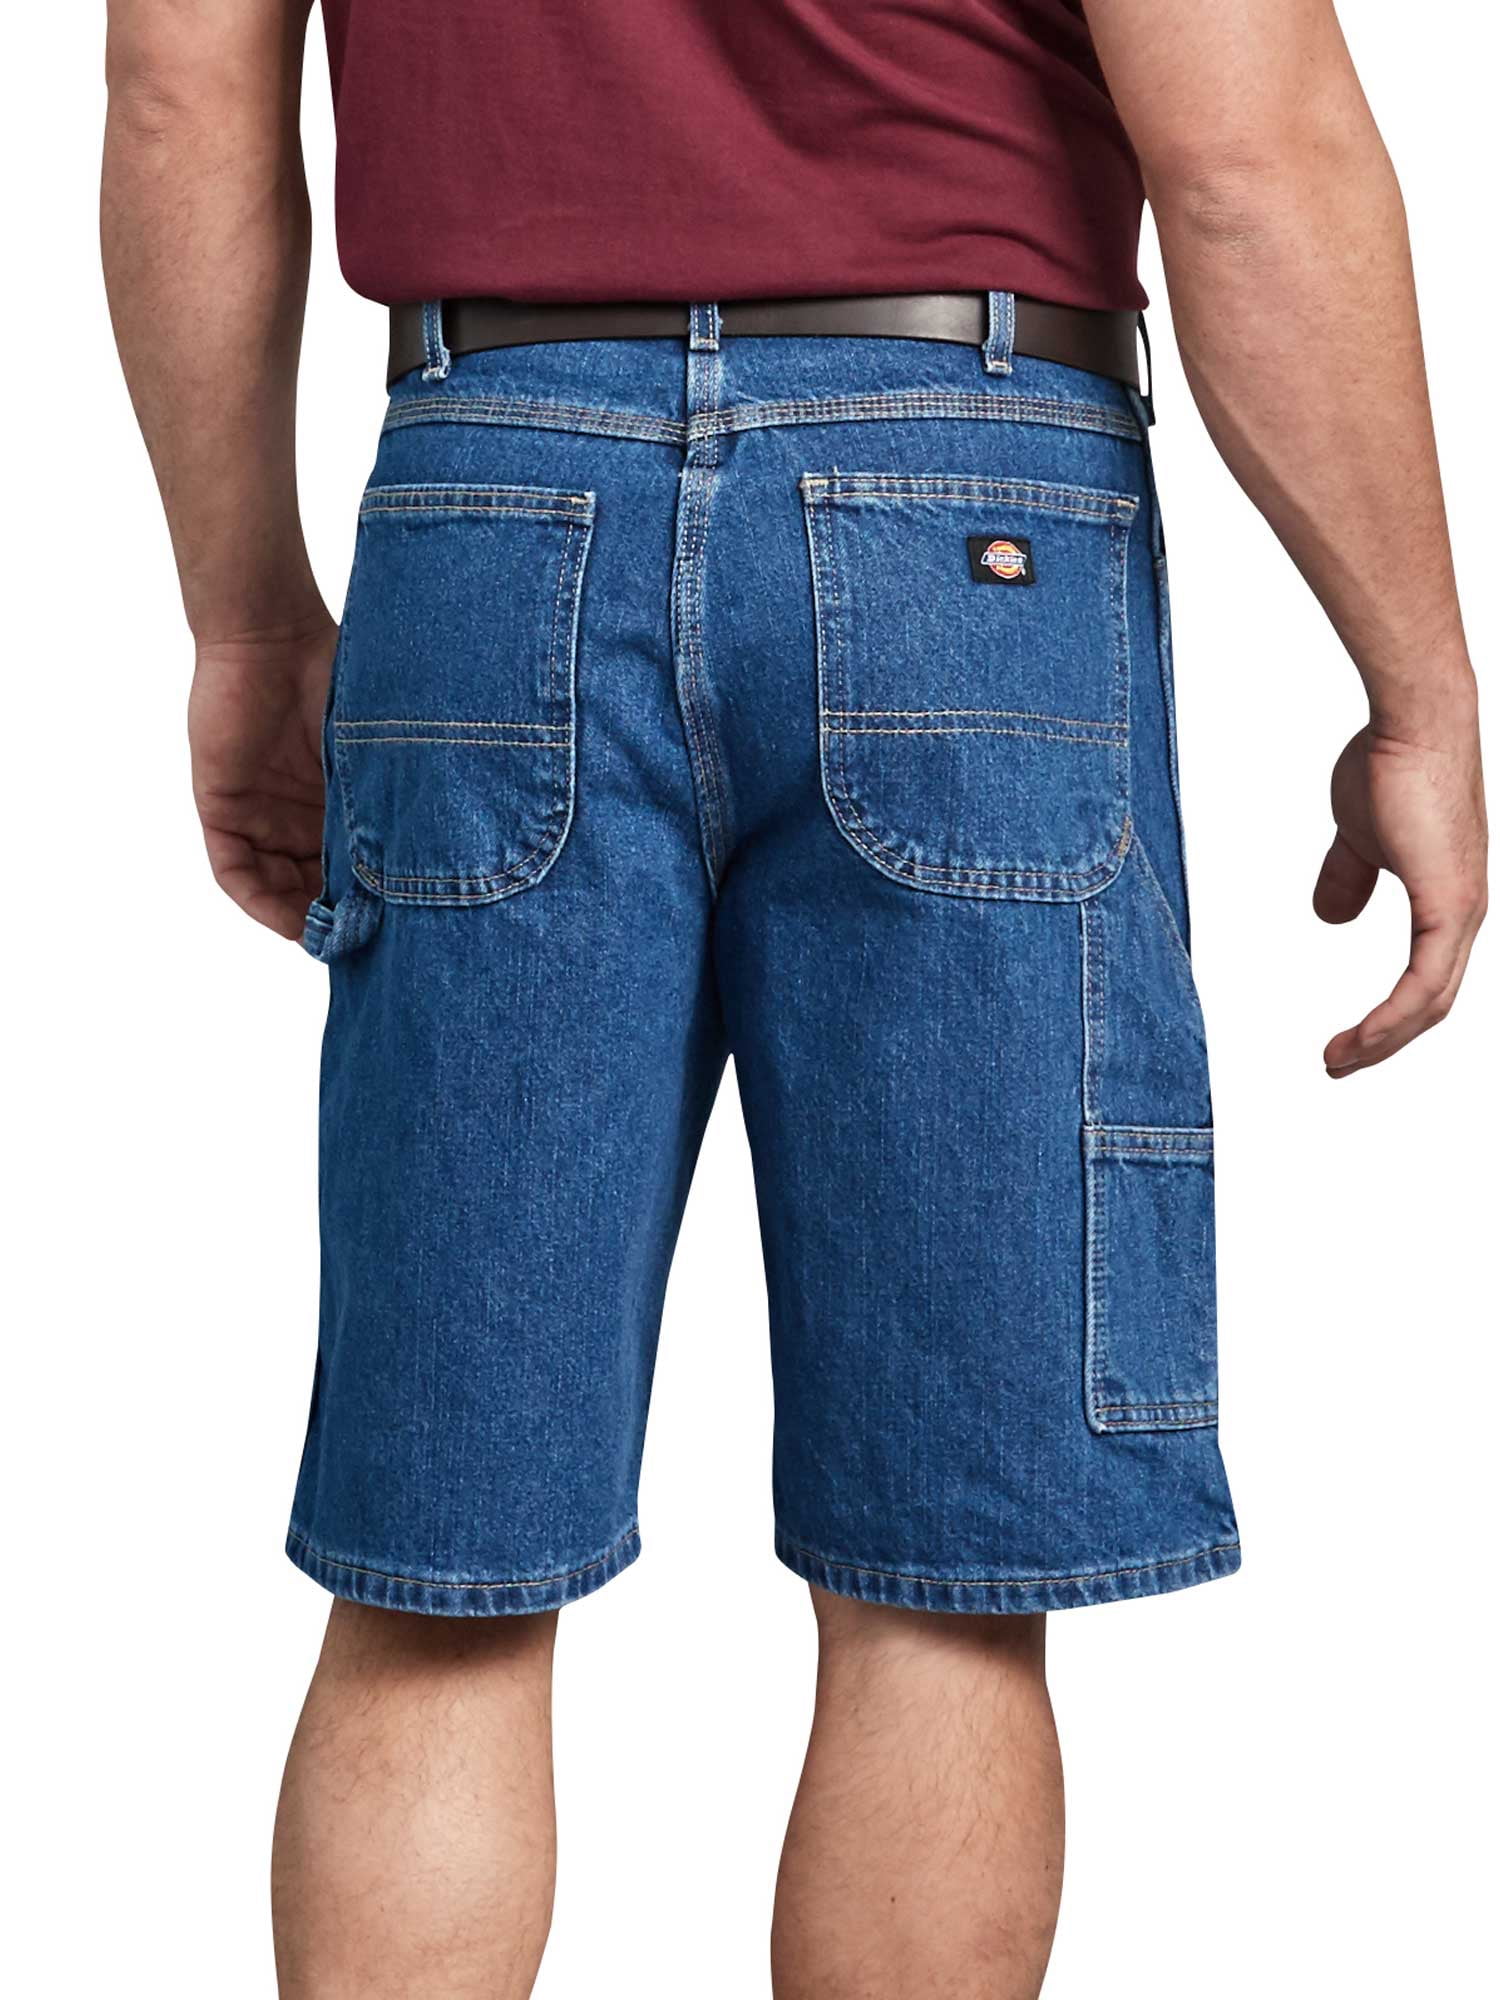 dickie jean shorts